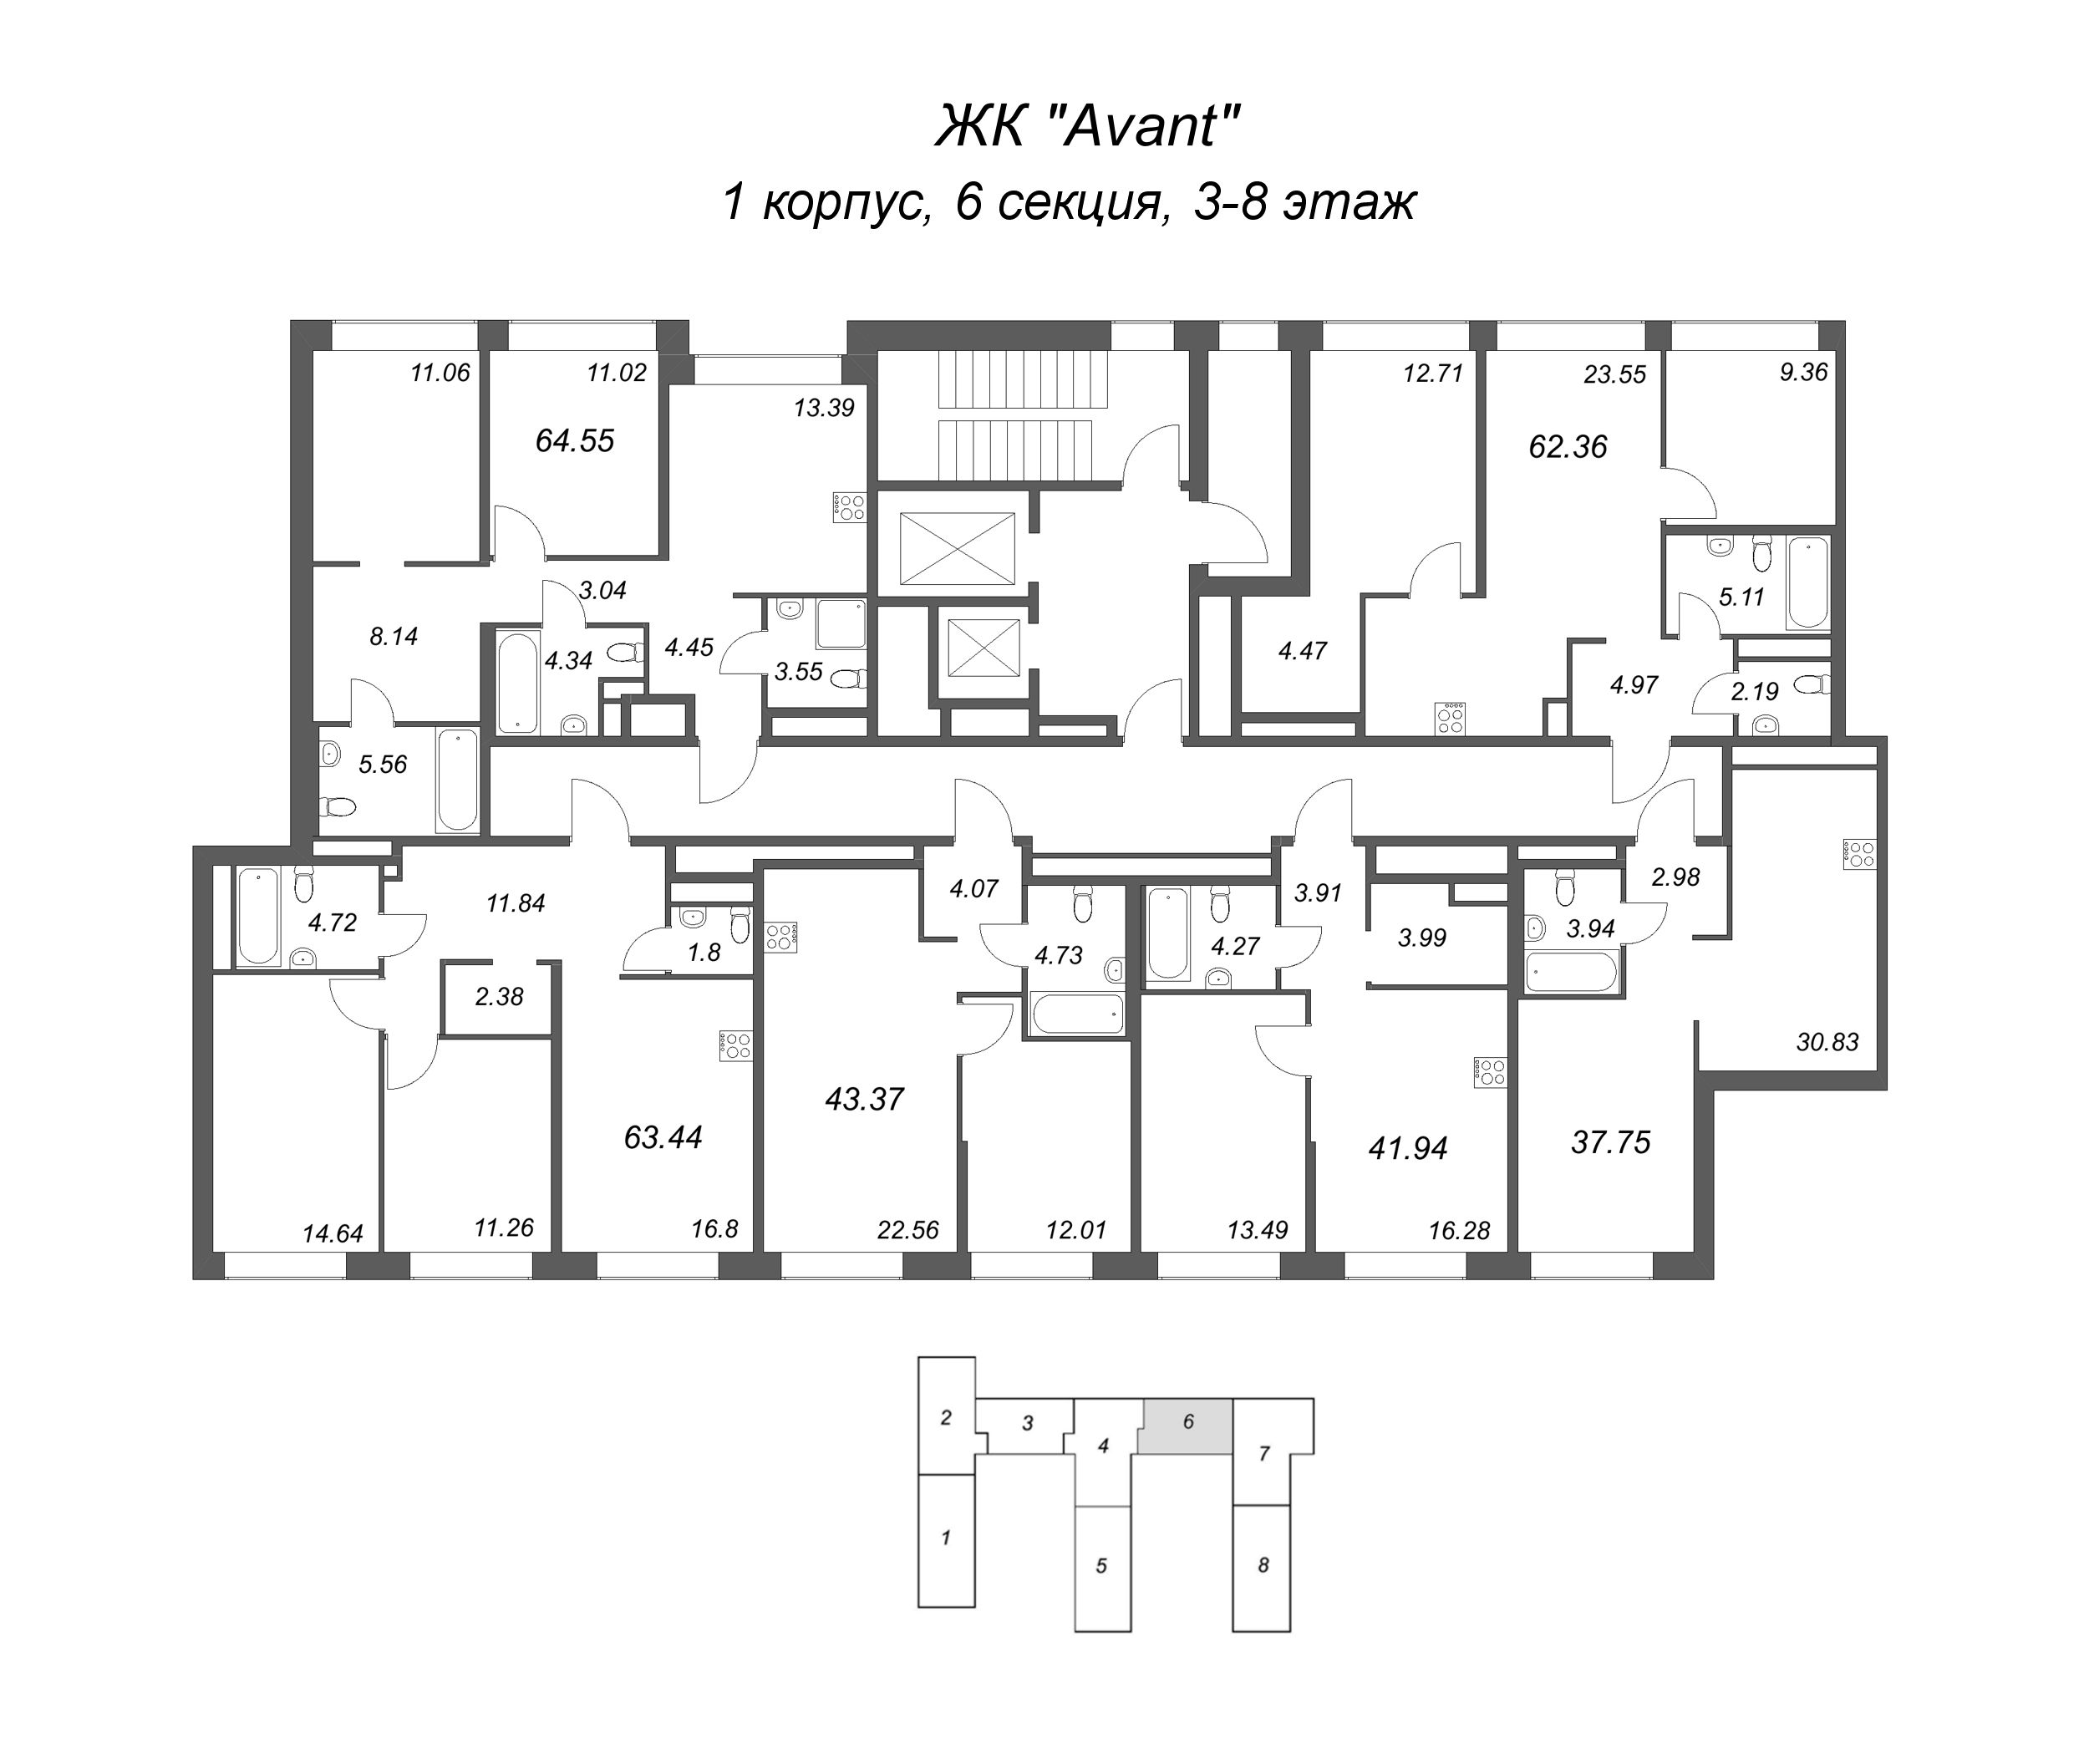 2-комнатная (Евро) квартира, 41.94 м² - планировка этажа